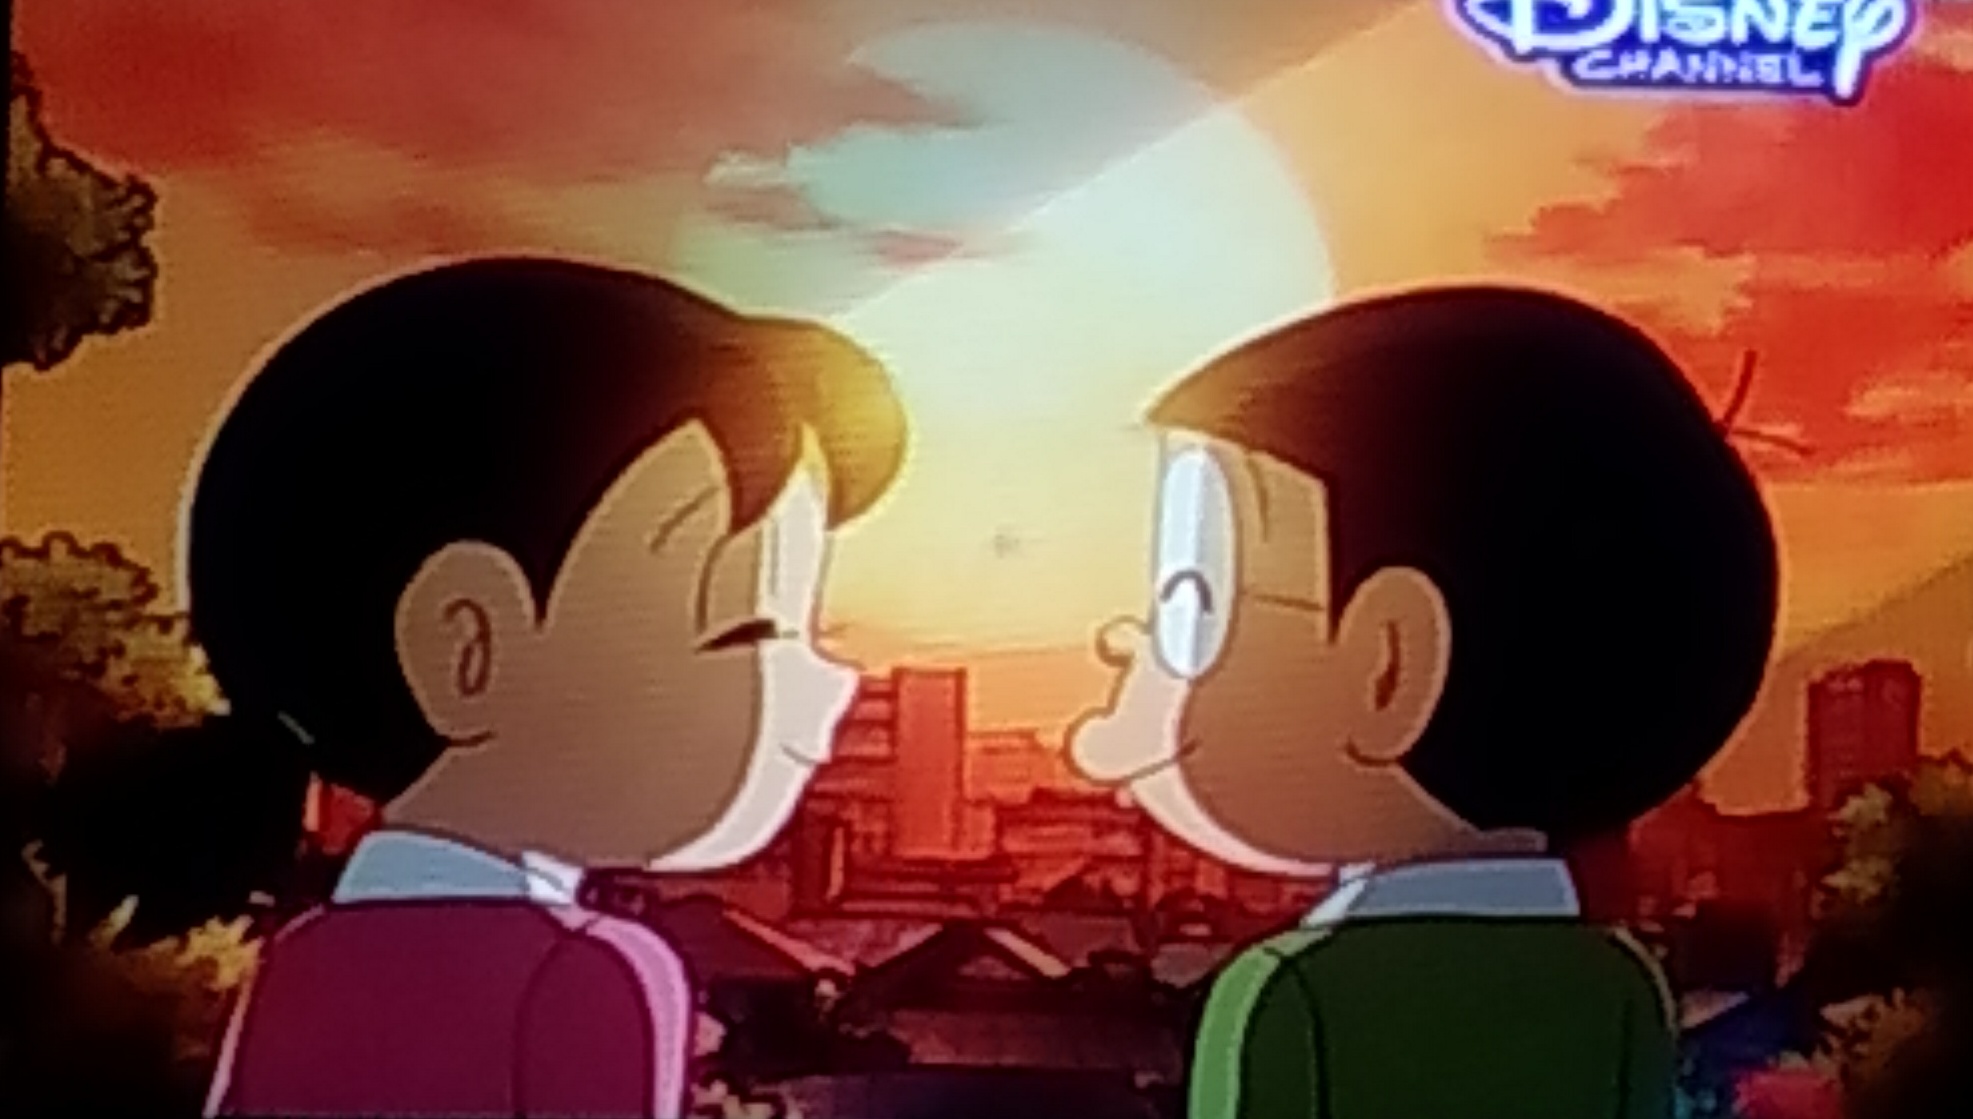 Top 100+ Doraemon Wallpaper Full HD, Nobita and Doraemon Pics